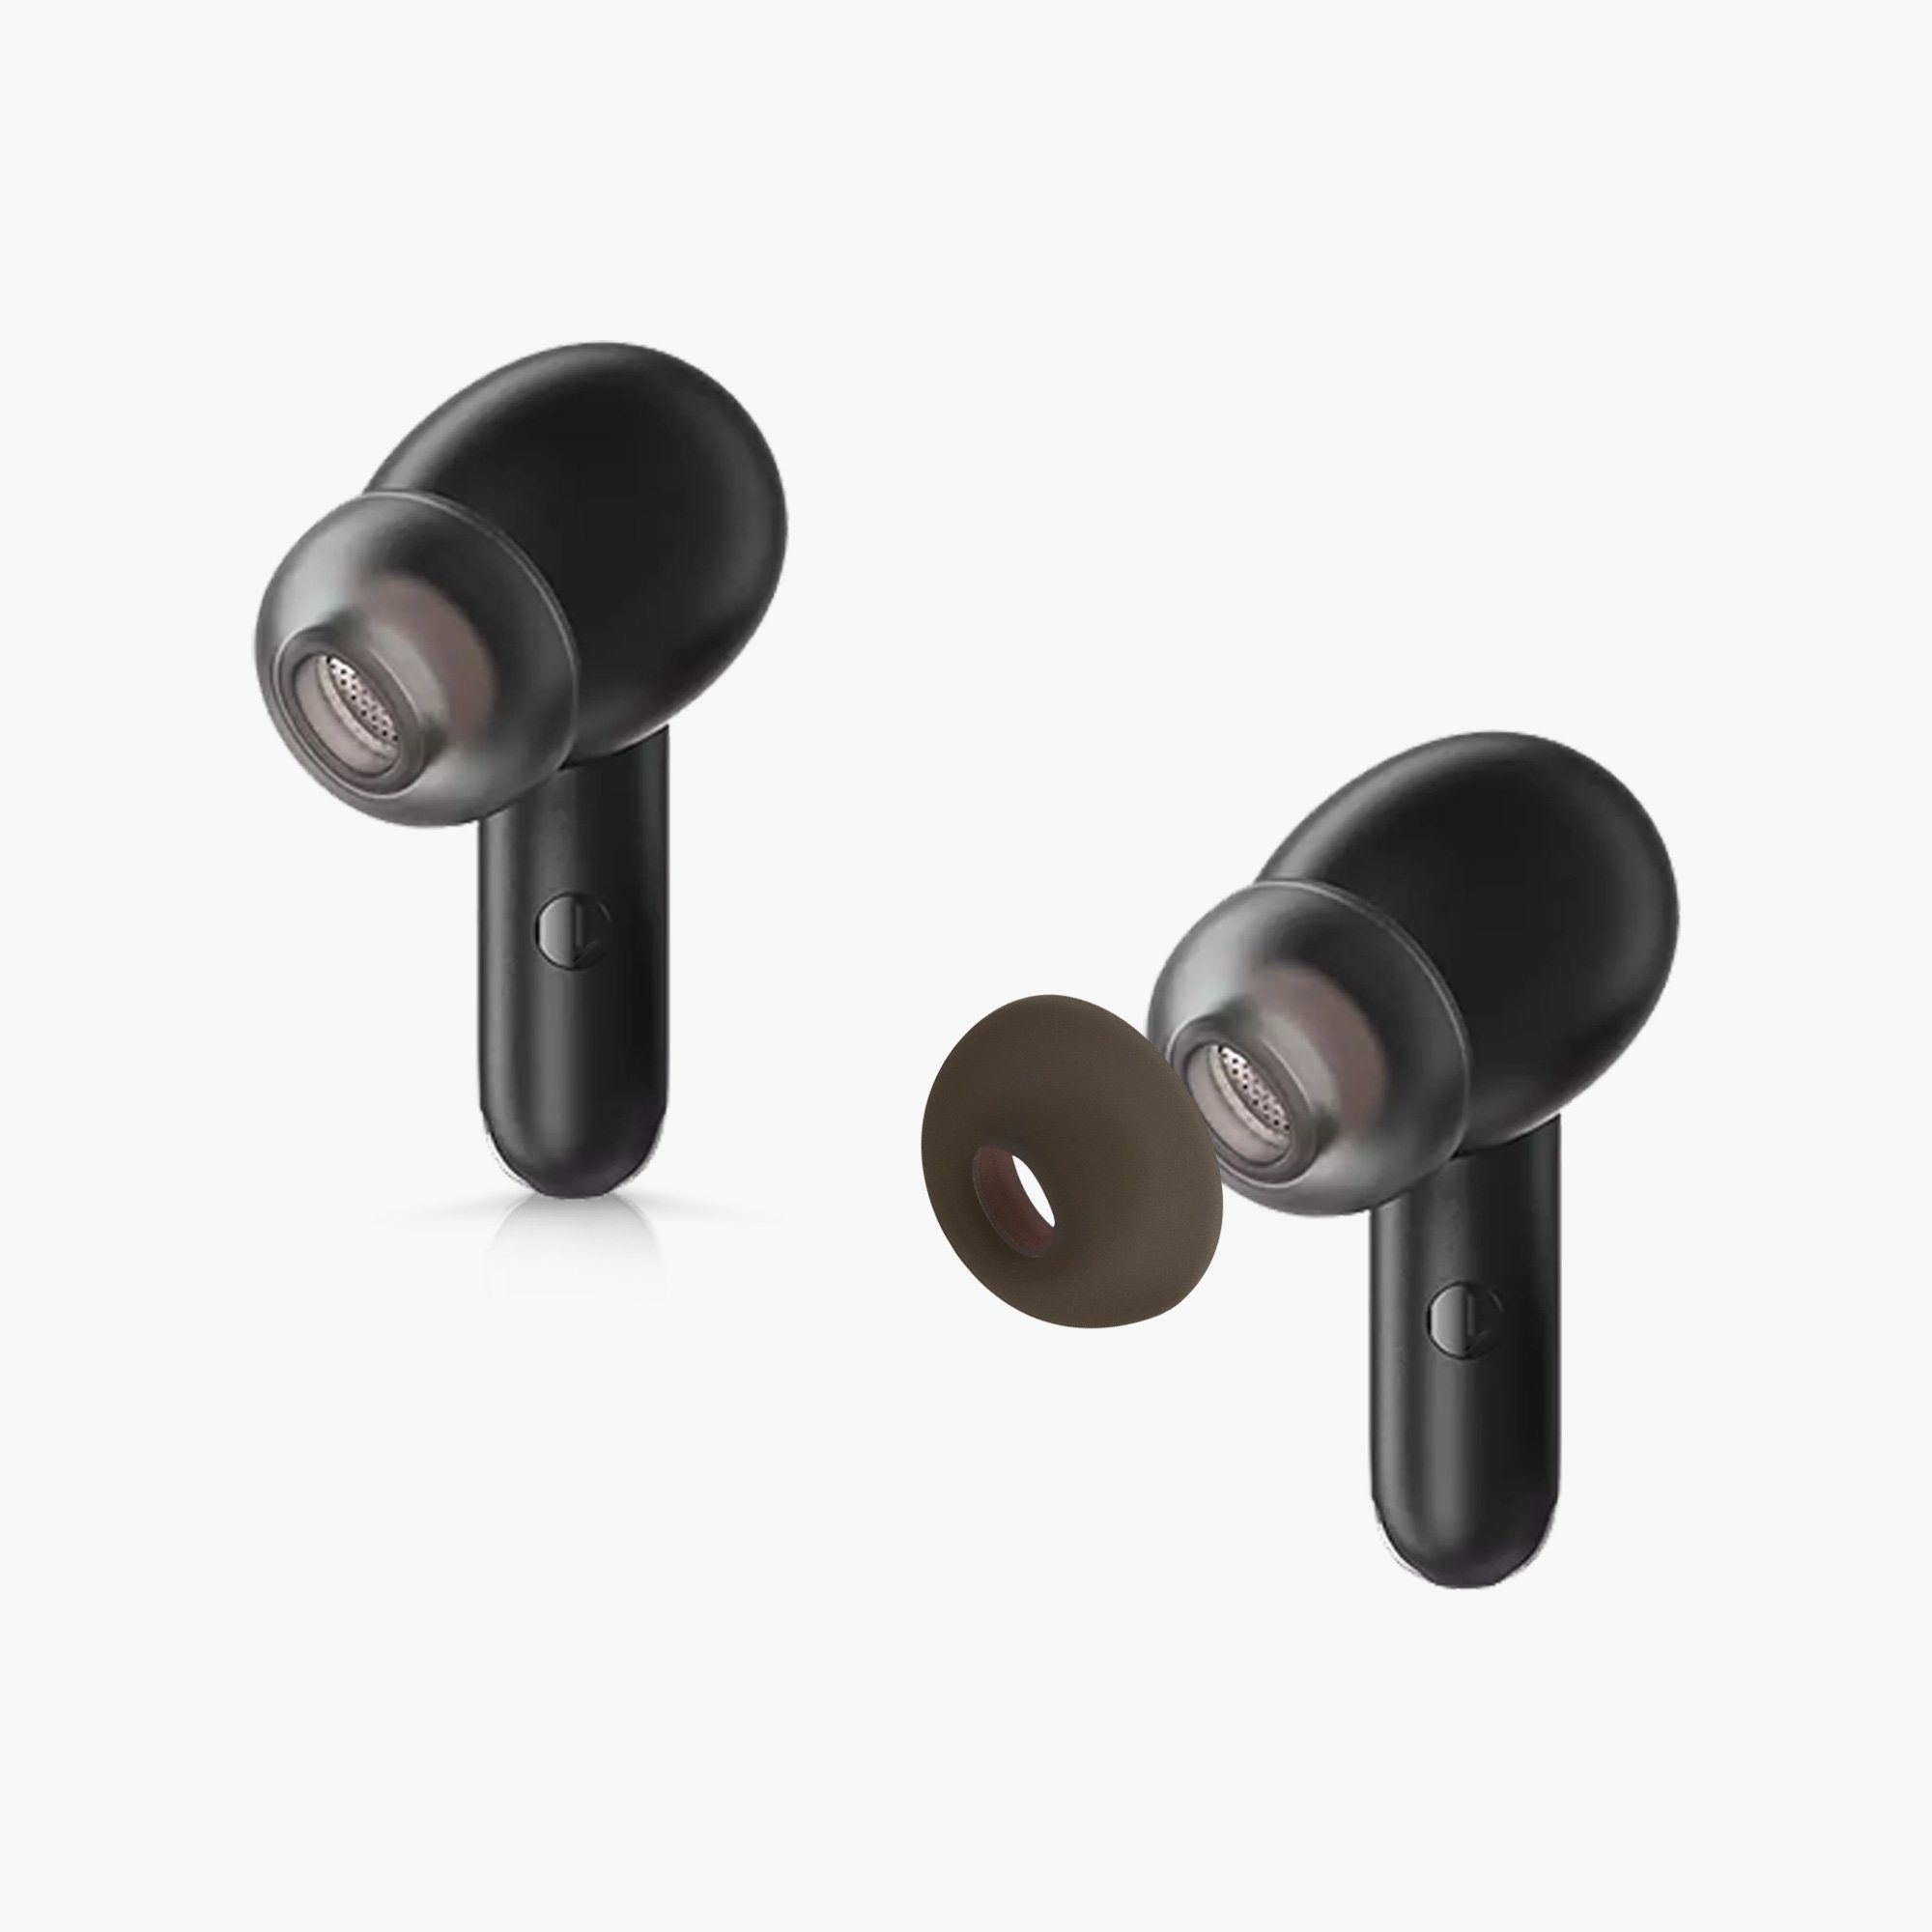 6x für SoundPeats In-Ear Pro Capsule 3 - Größen Ohrpolster Silikon (3 Ohrstöpsel kwmobile Kopfhörer) Polster